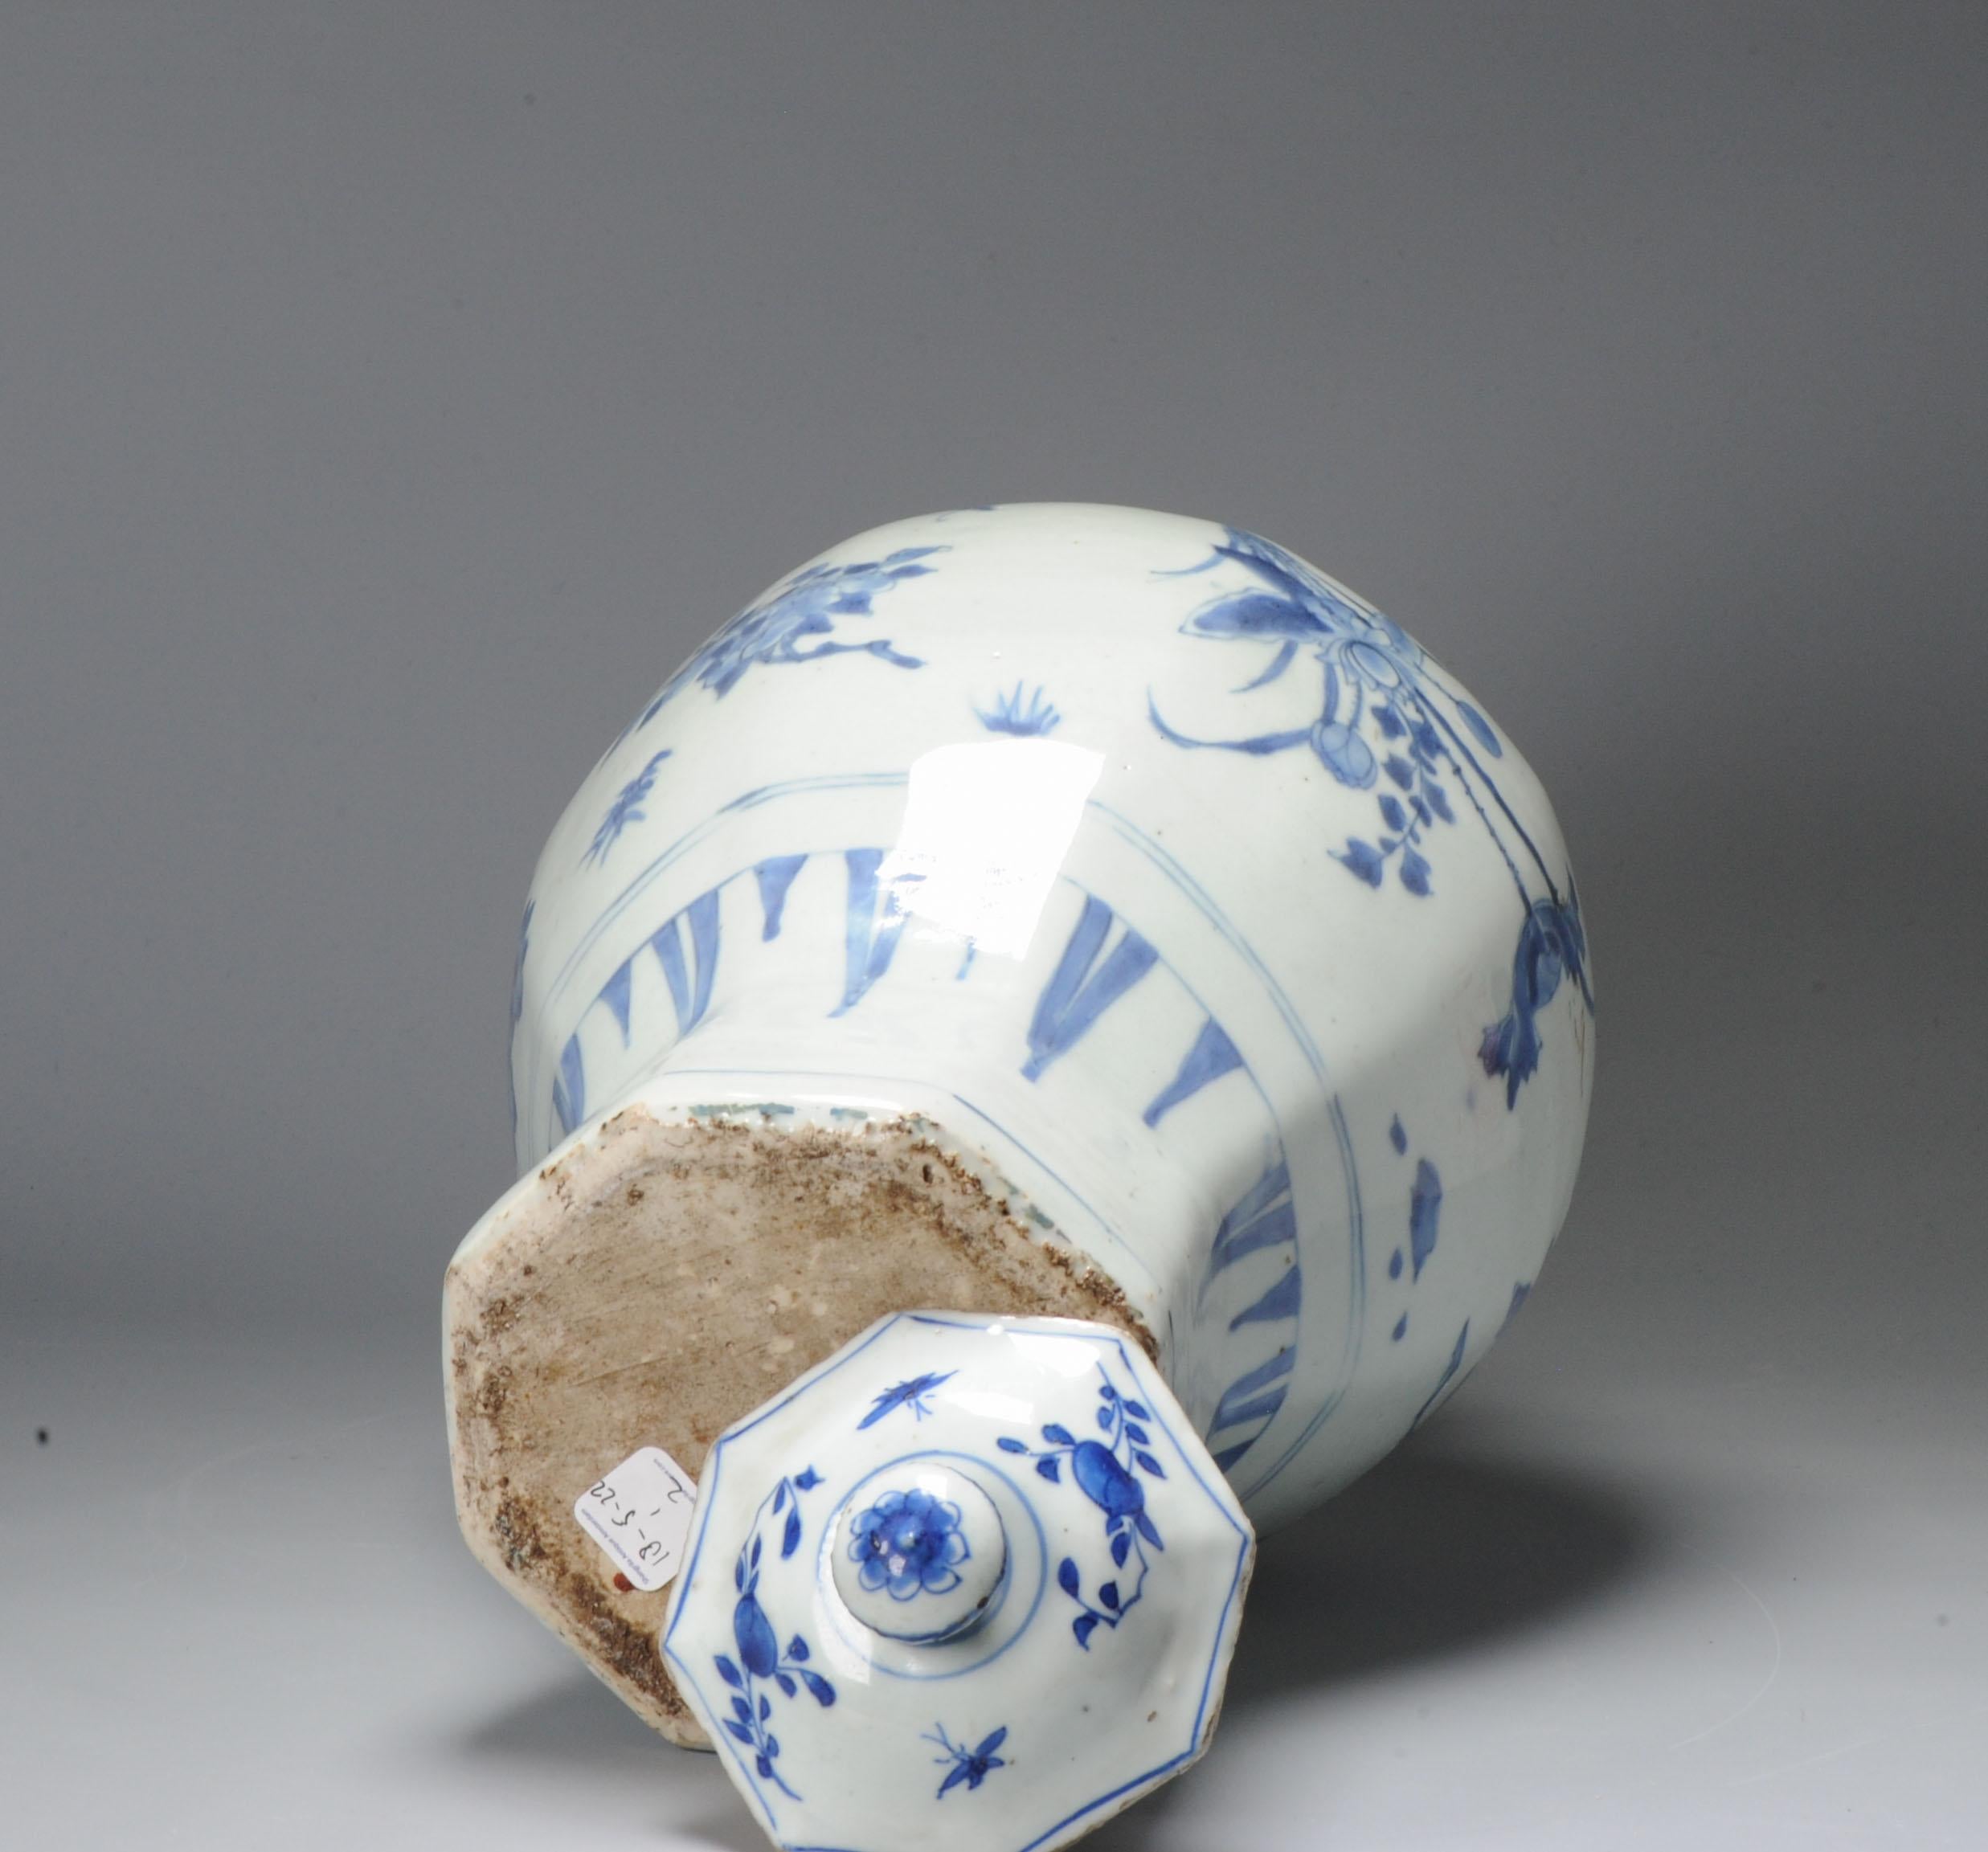 Rare Antique 17th C Transitional Chinese Porcelain Lidded Vase / Jar China For Sale 9